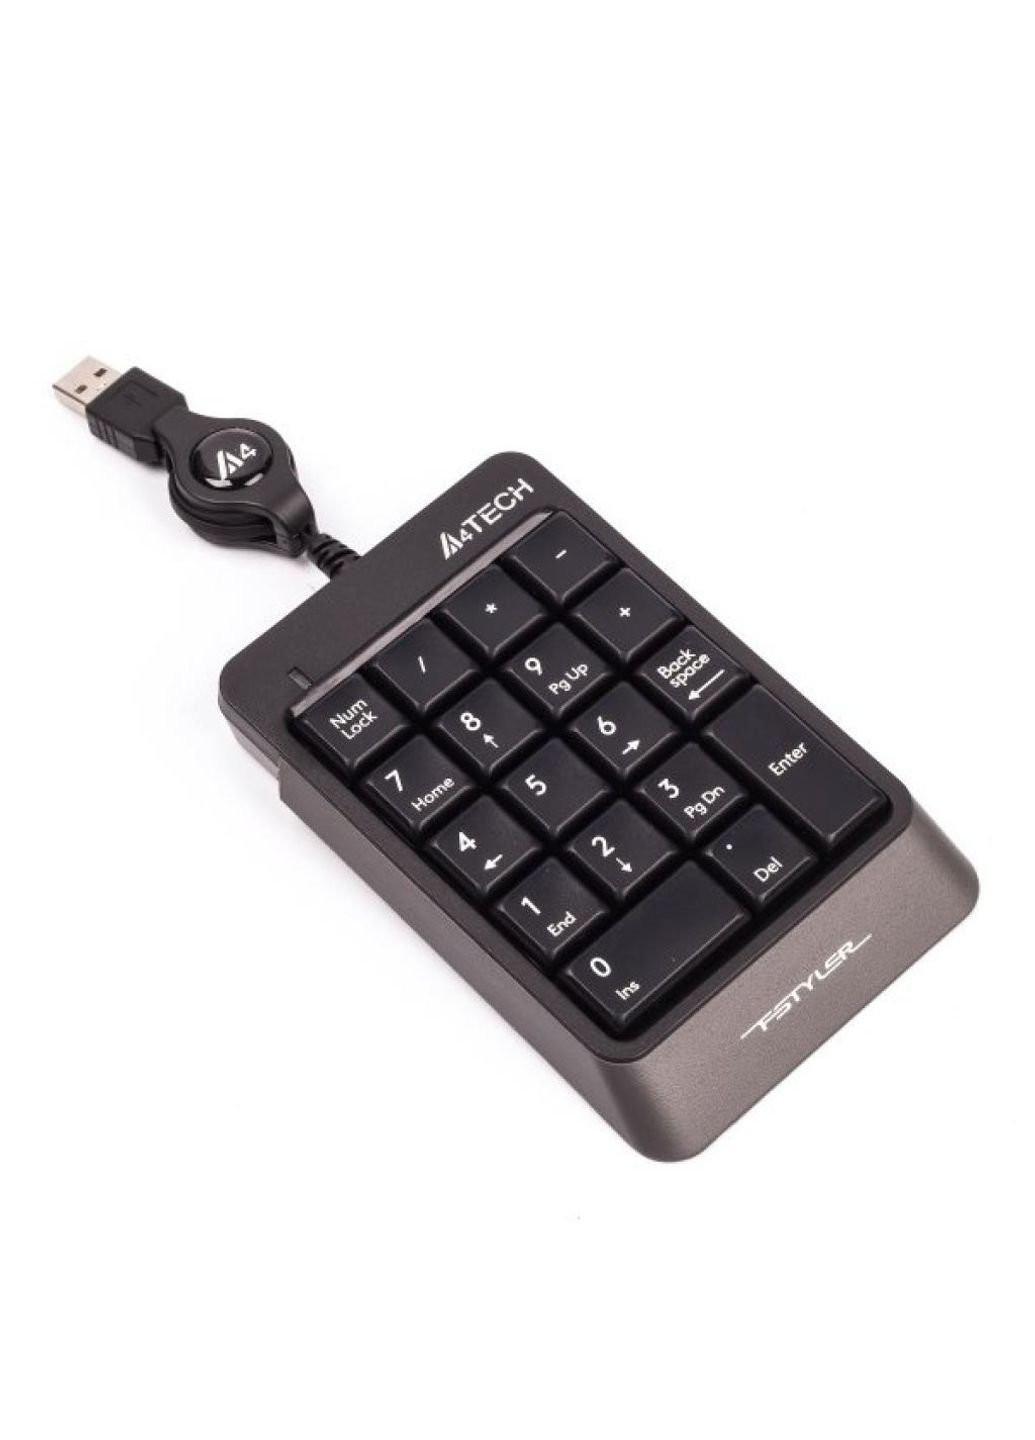 Клавиатура A4Tech fk13 grey (253546126)